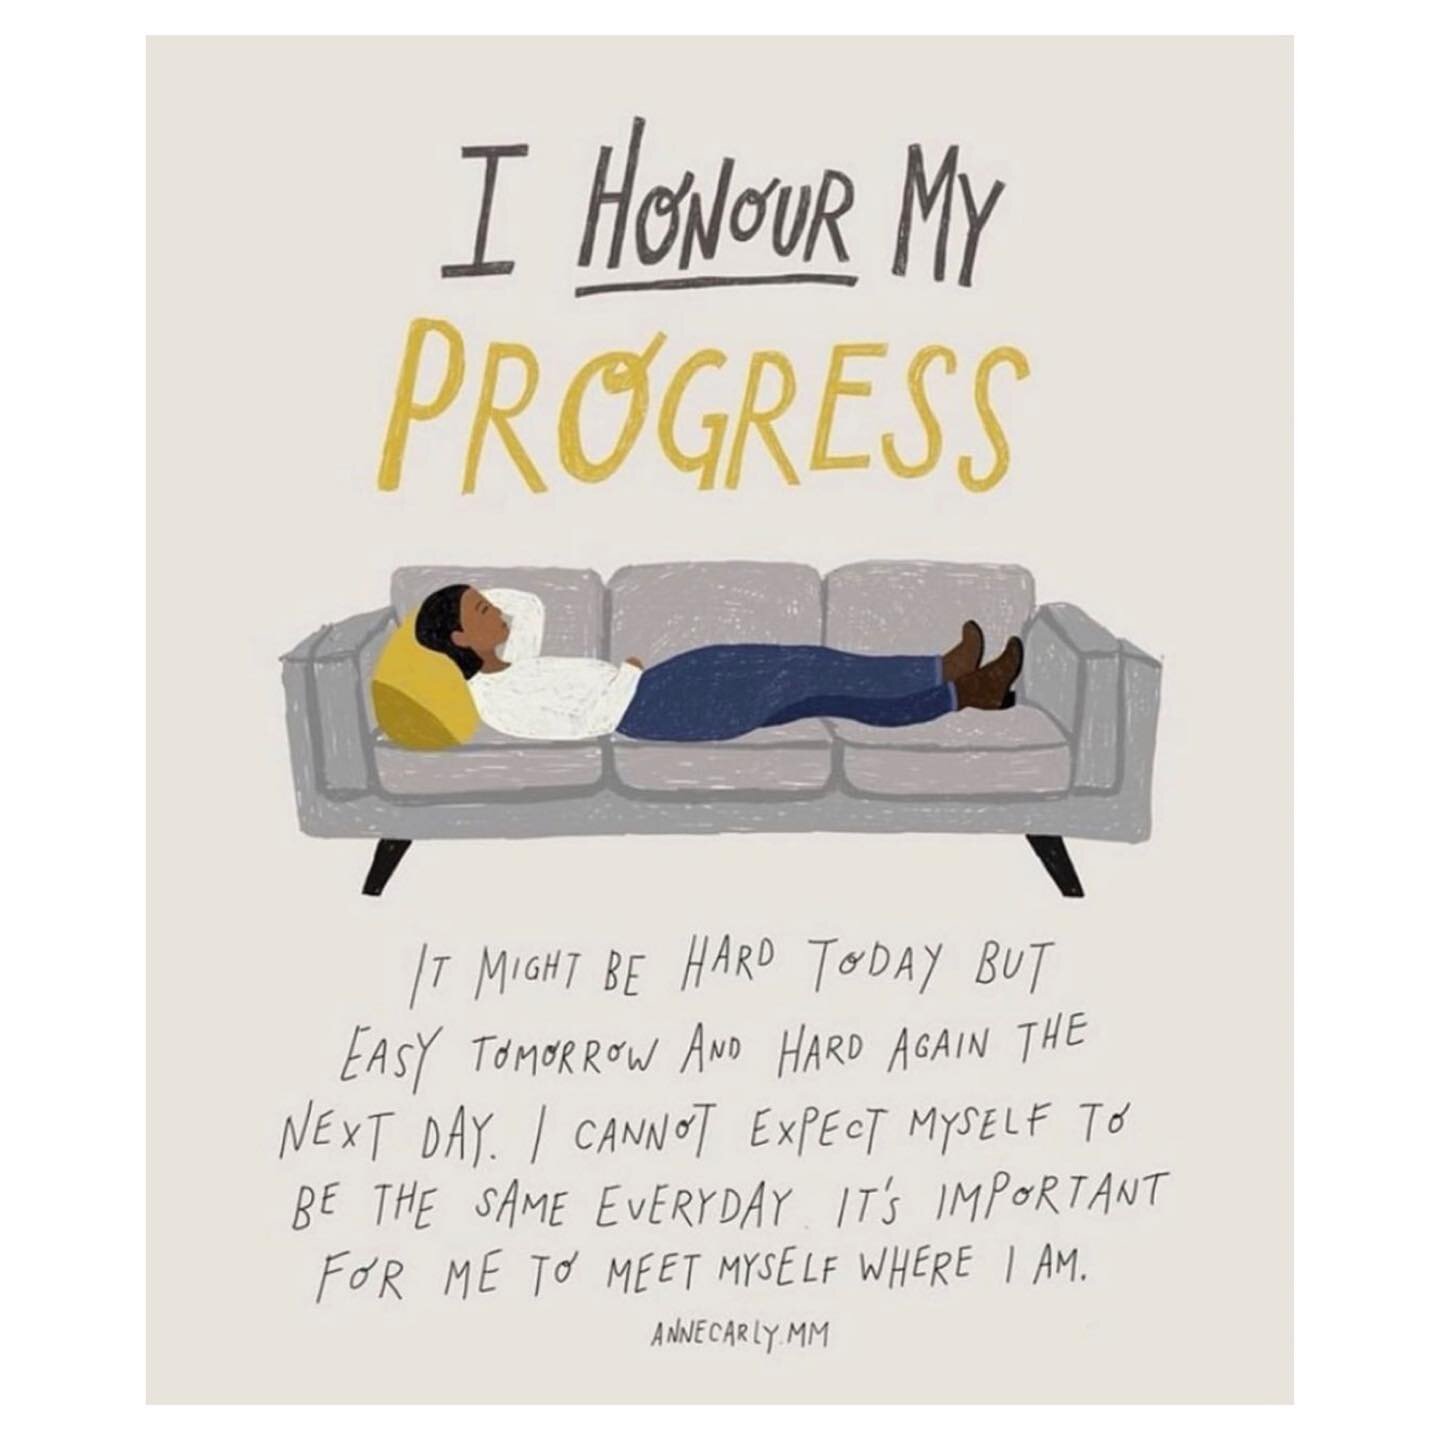 Progress is progress whether it is an inch or a mile.
.
.
.
#mindfulpractice #mindfulness #mentalhealth #mentalhealthawareness #selflove #psychology #mindfulliving #highlandpark #losfeliz #silverlake #echopark #NELA #latinx #losangeles #mindfullife #